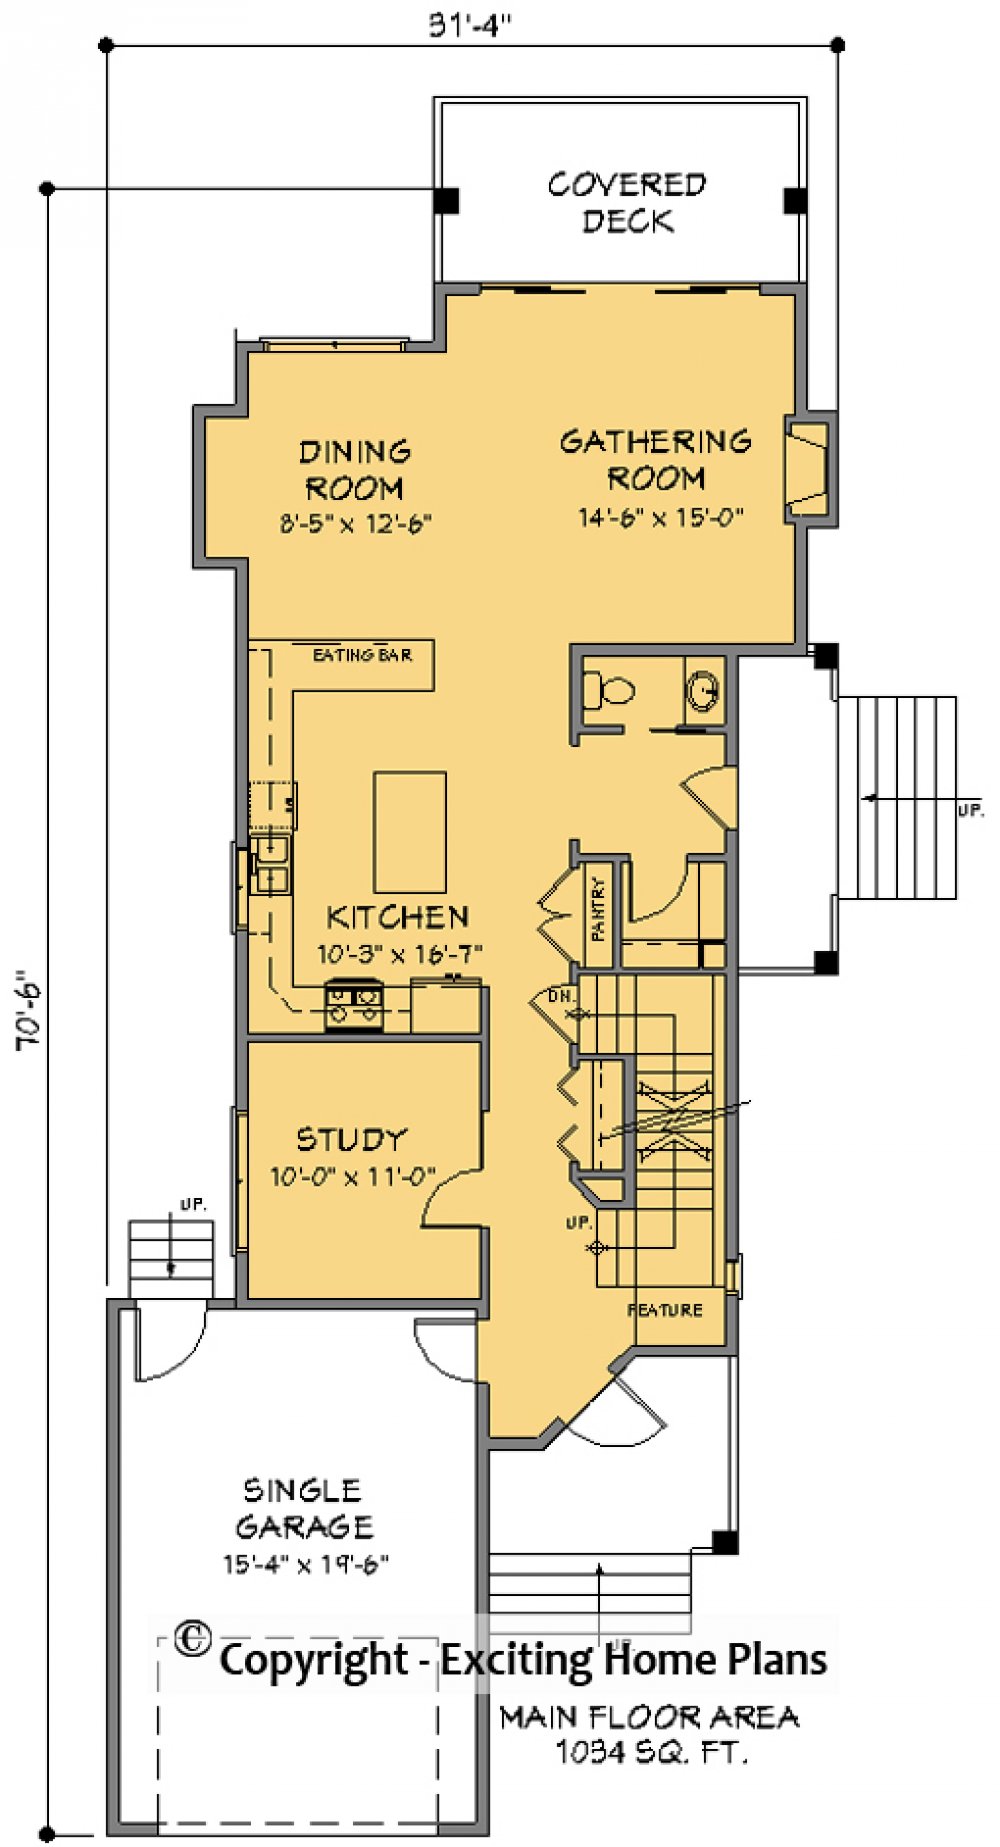 House Plan E1290-10 – Main Floor Plan